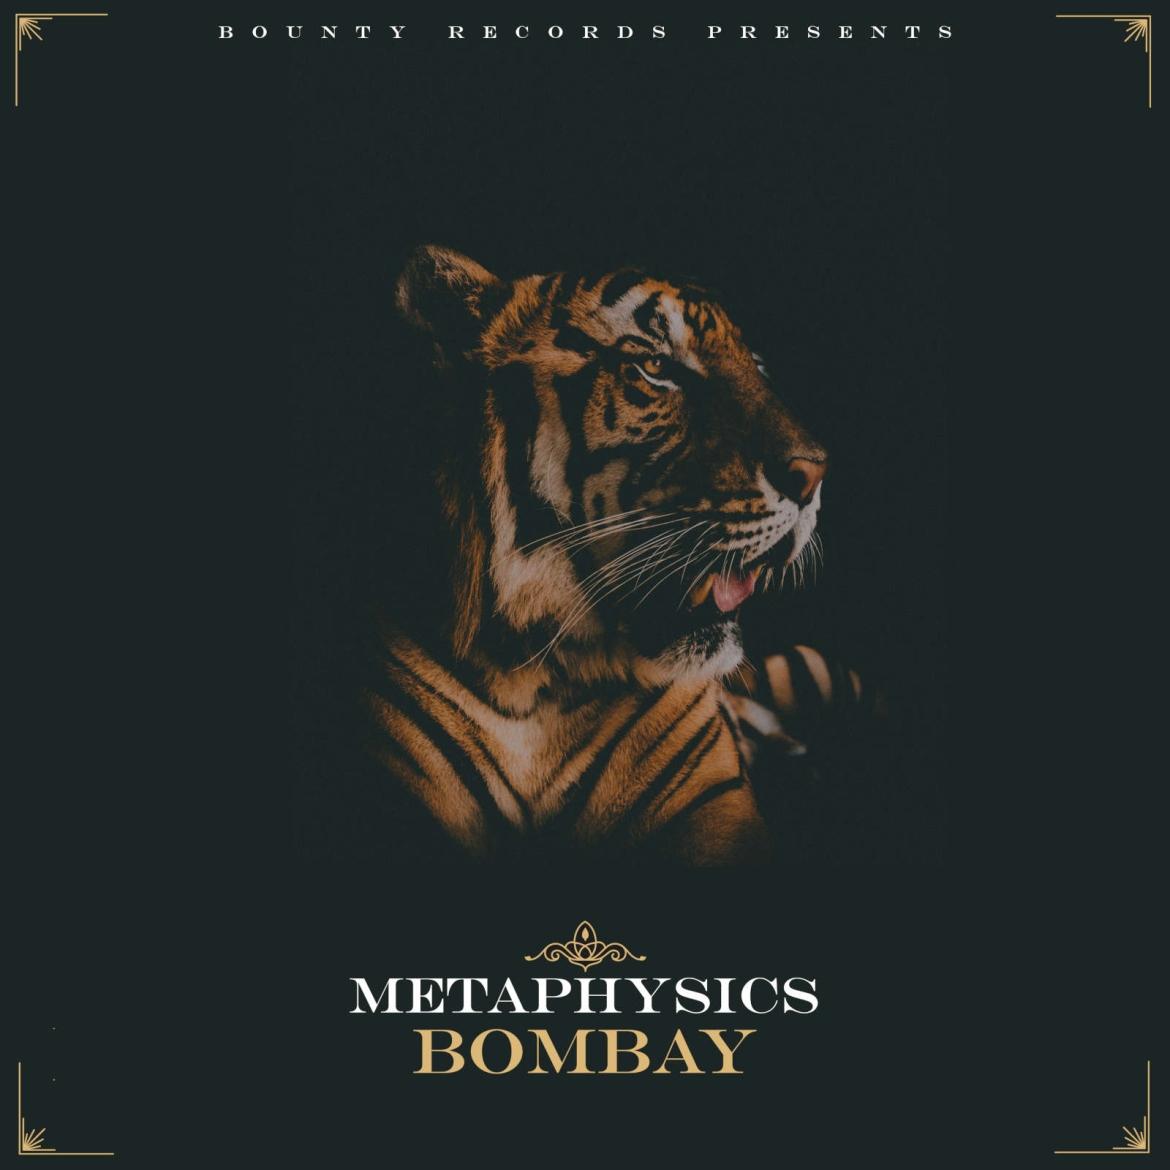 Metaphysics - Bombay